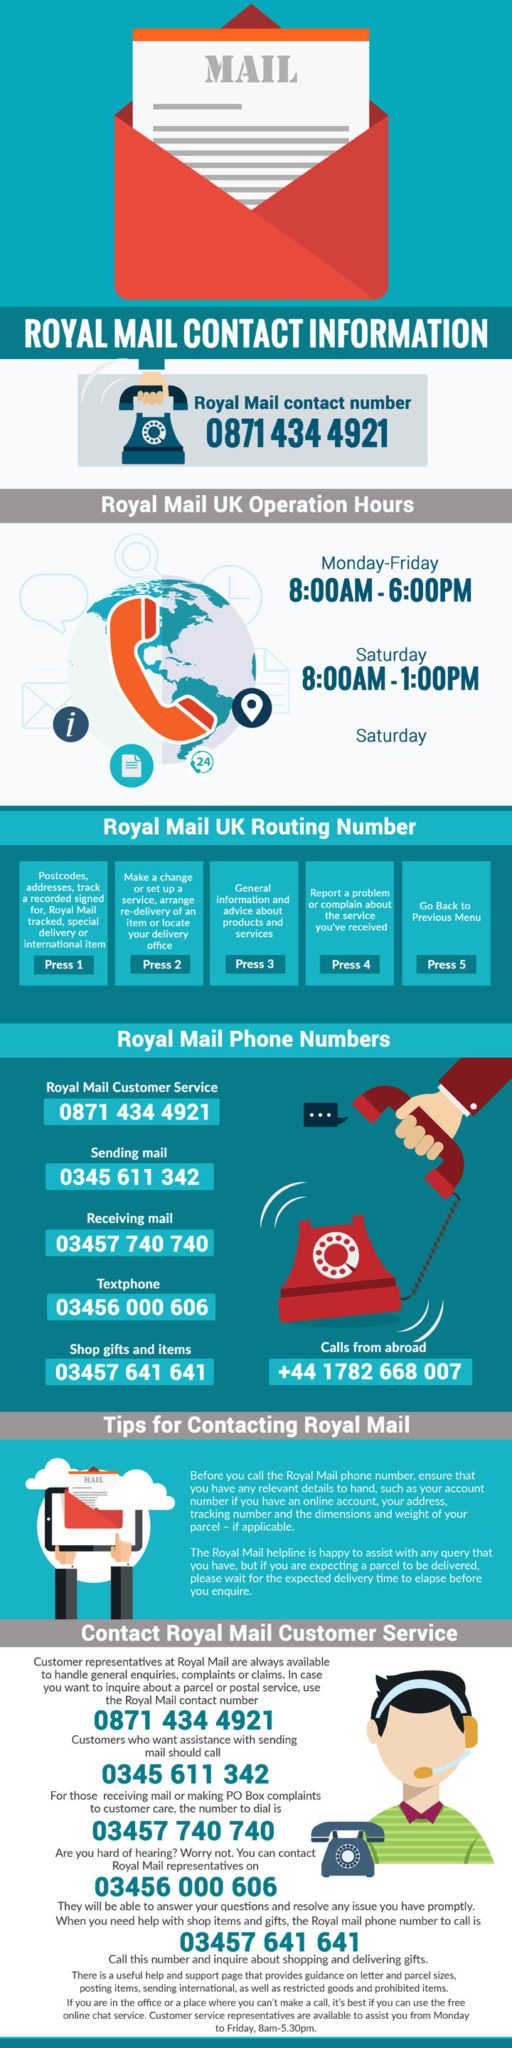 Royal Mail Helpline